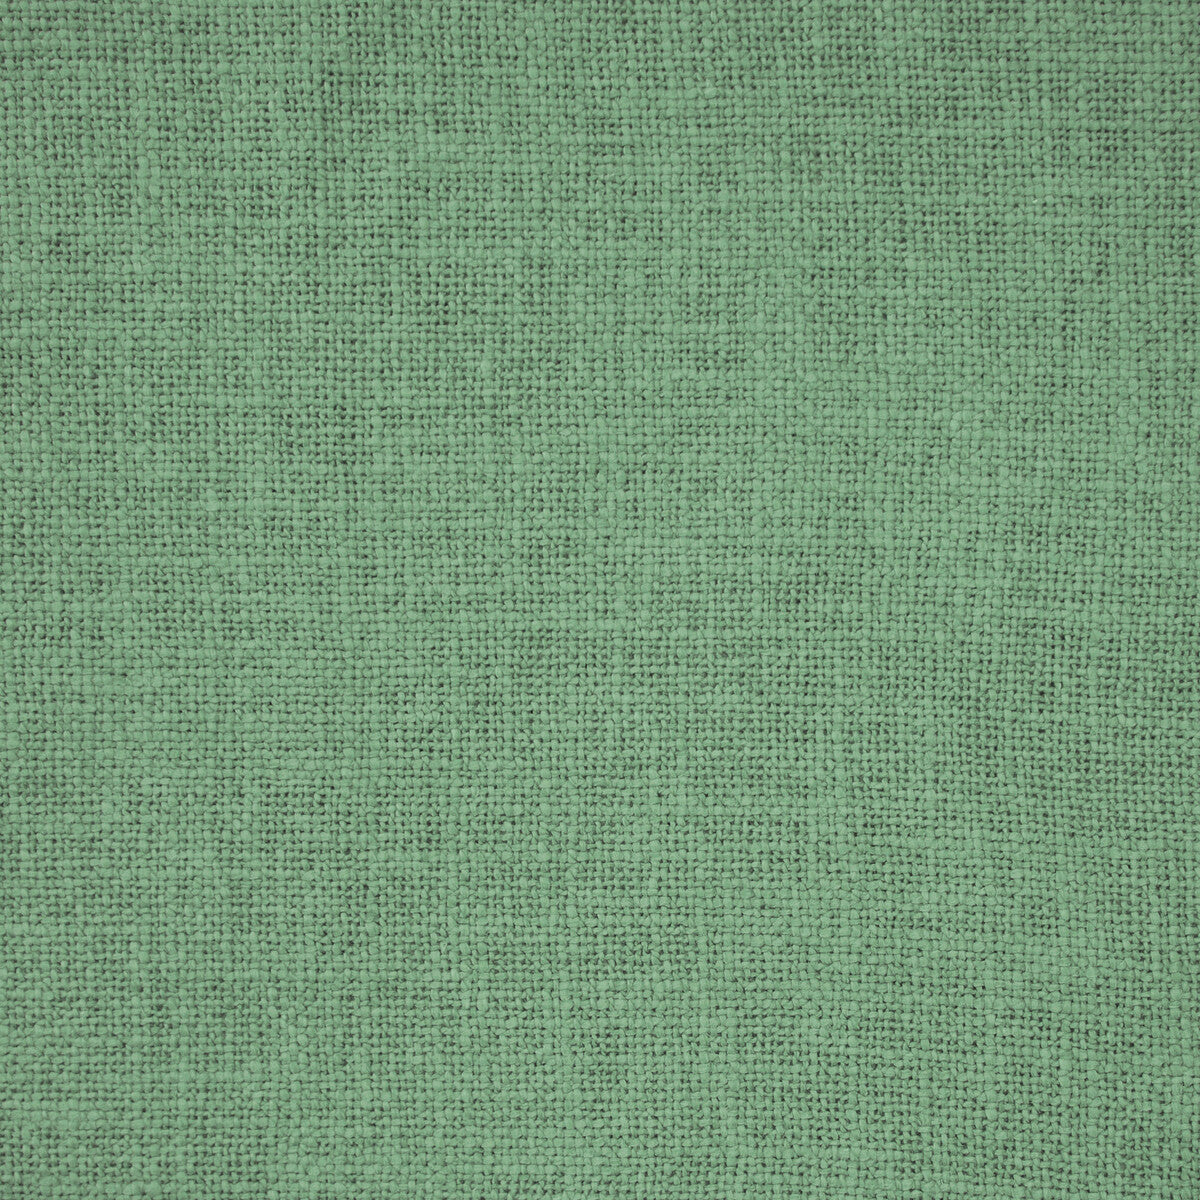 Bellver fabric in esmeralda color - pattern GDT5676.033.0 - by Gaston y Daniela in the Gaston Maiorica collection